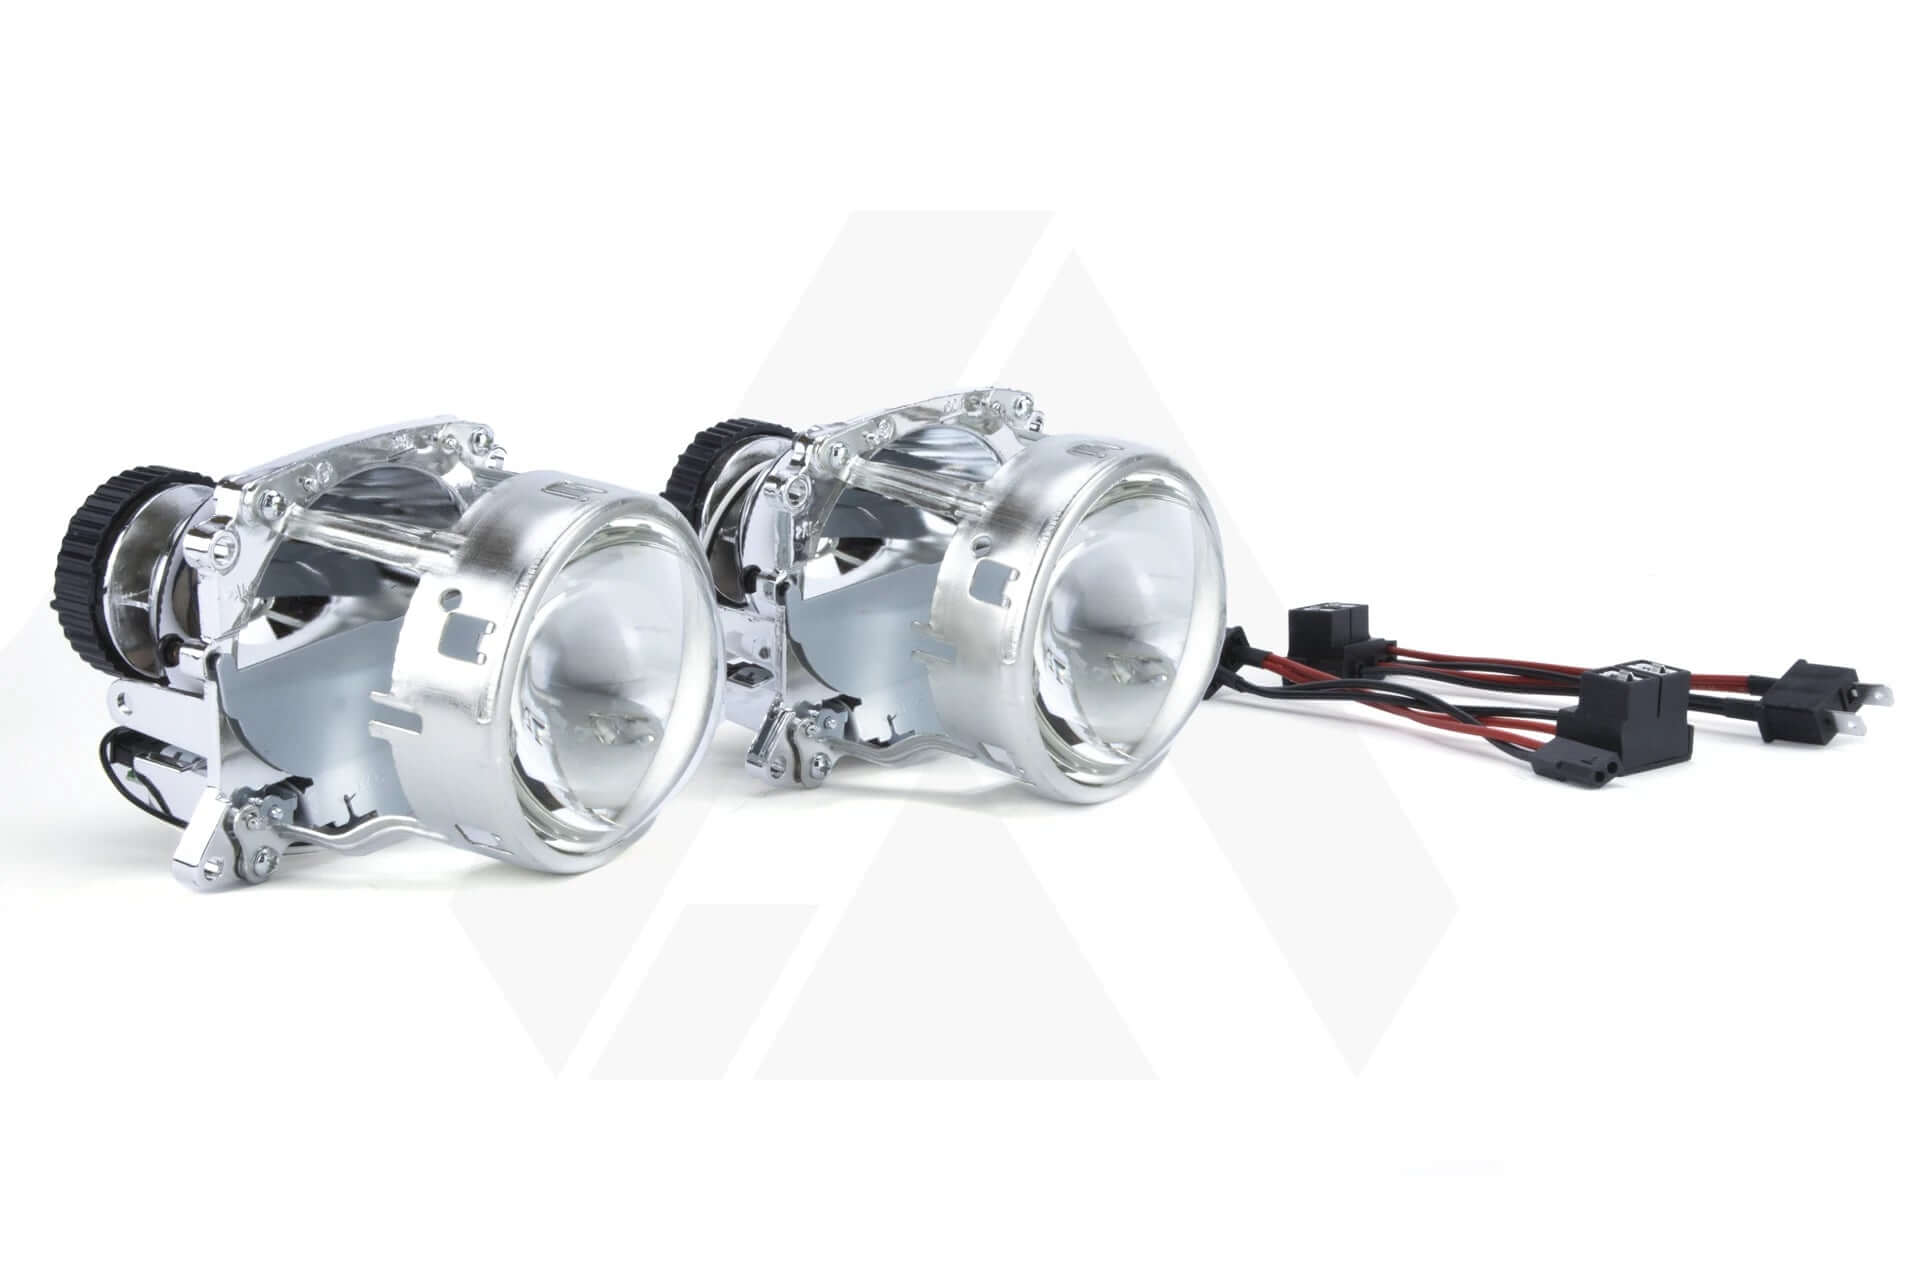 BMW X5 E70 06-13 bi-xenon headlight repair & upgrade kit for D1S headlights